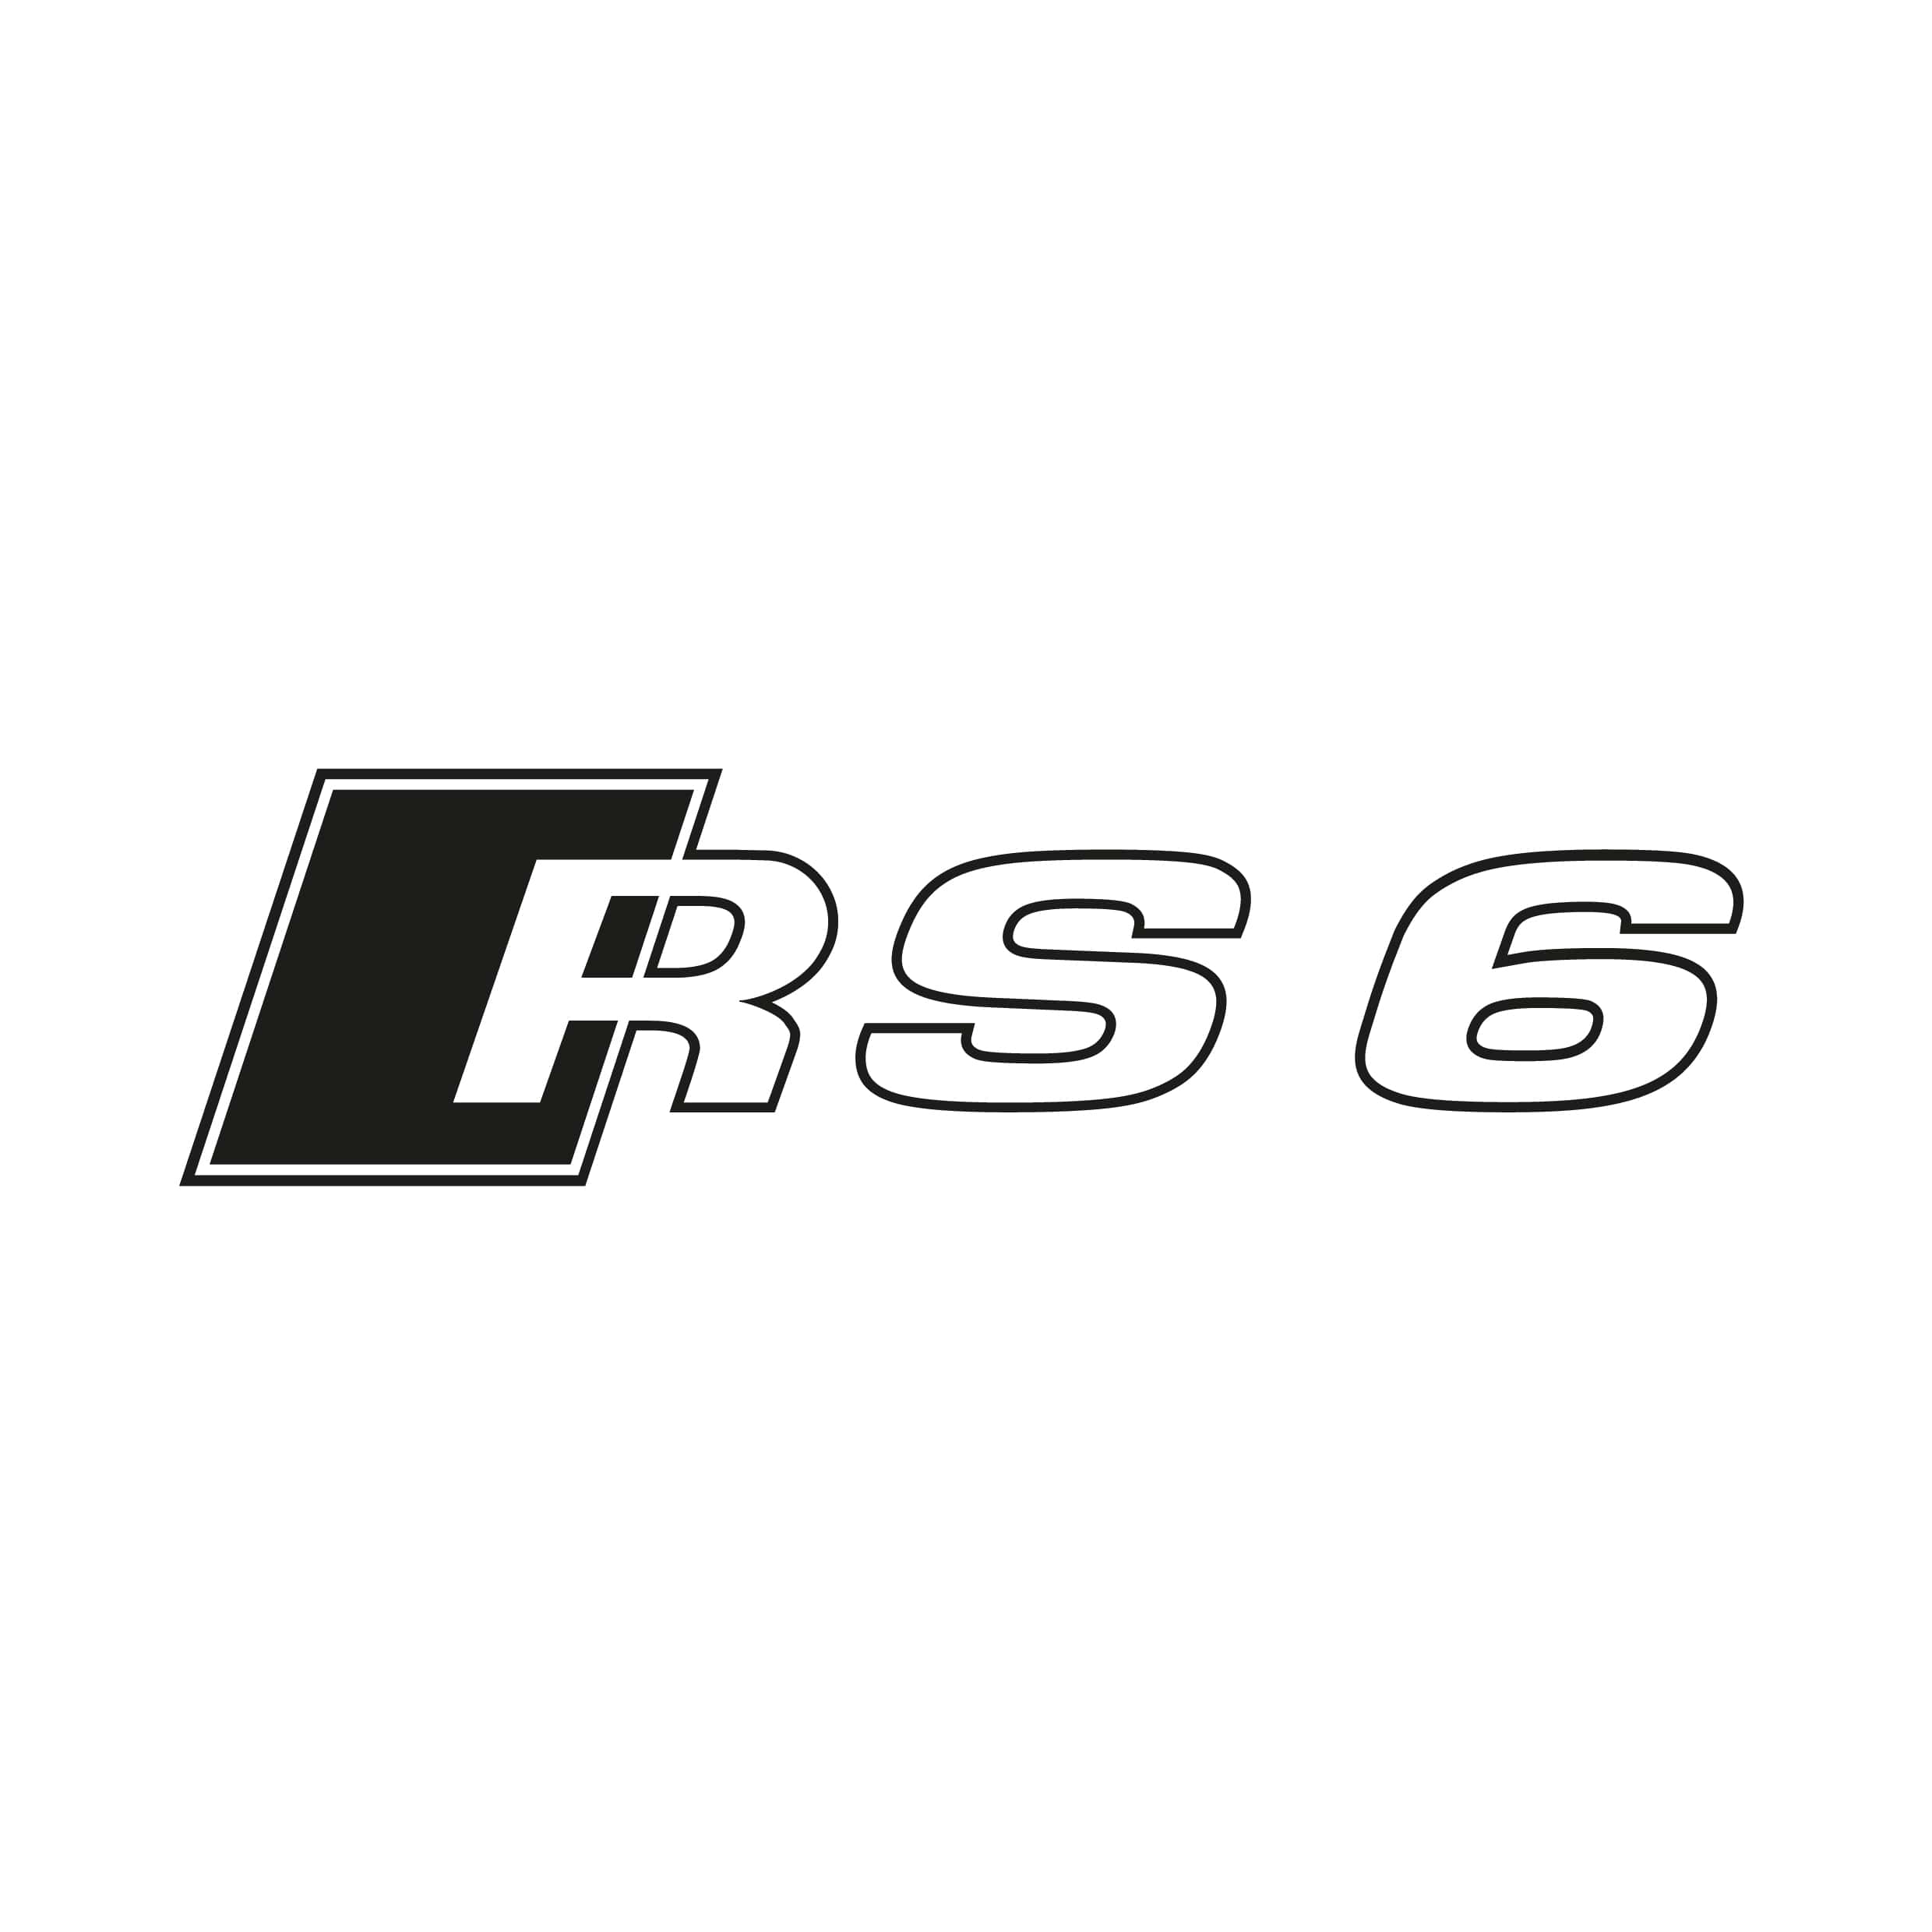 stickers-audi-rs6-ref21-autocollant-voiture-sticker-auto-autocollants-decals-sponsors-racing-tuning-sport-logo-min